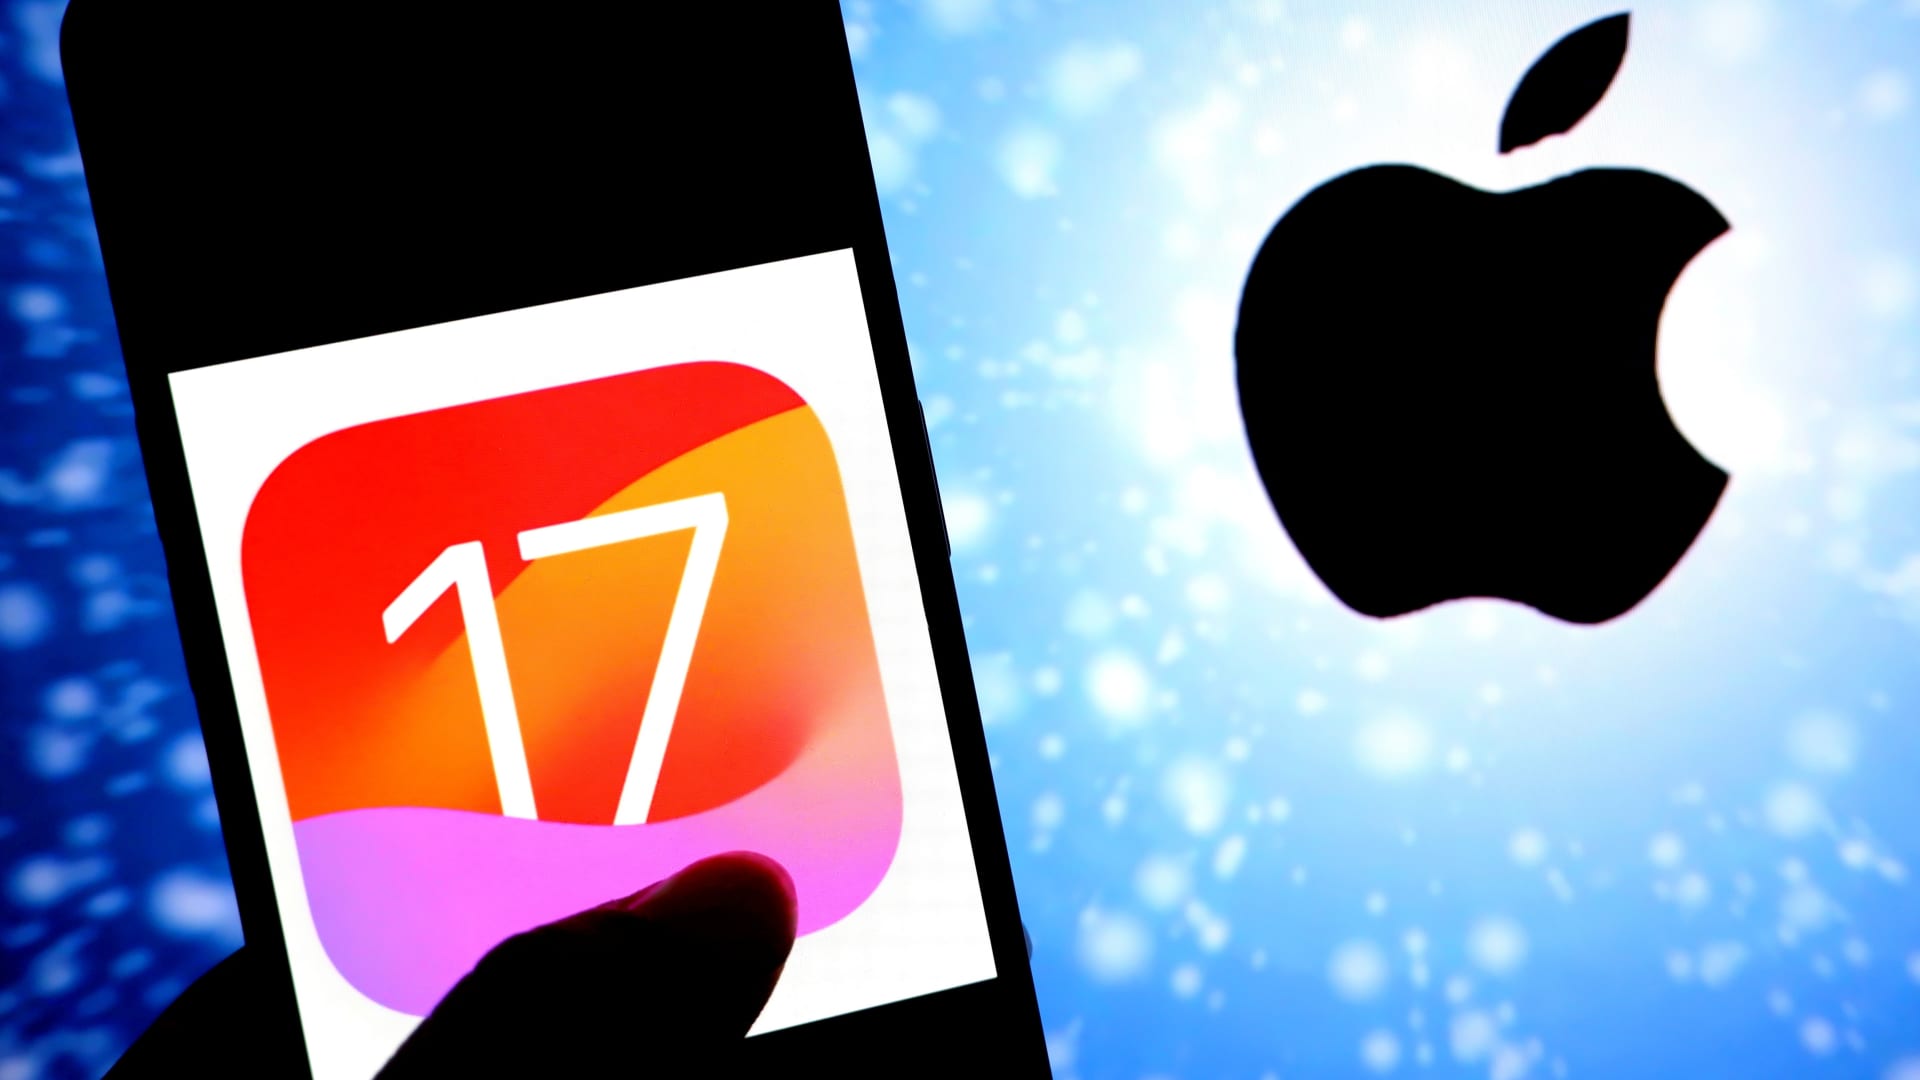 Apple announces iOS 17 release date